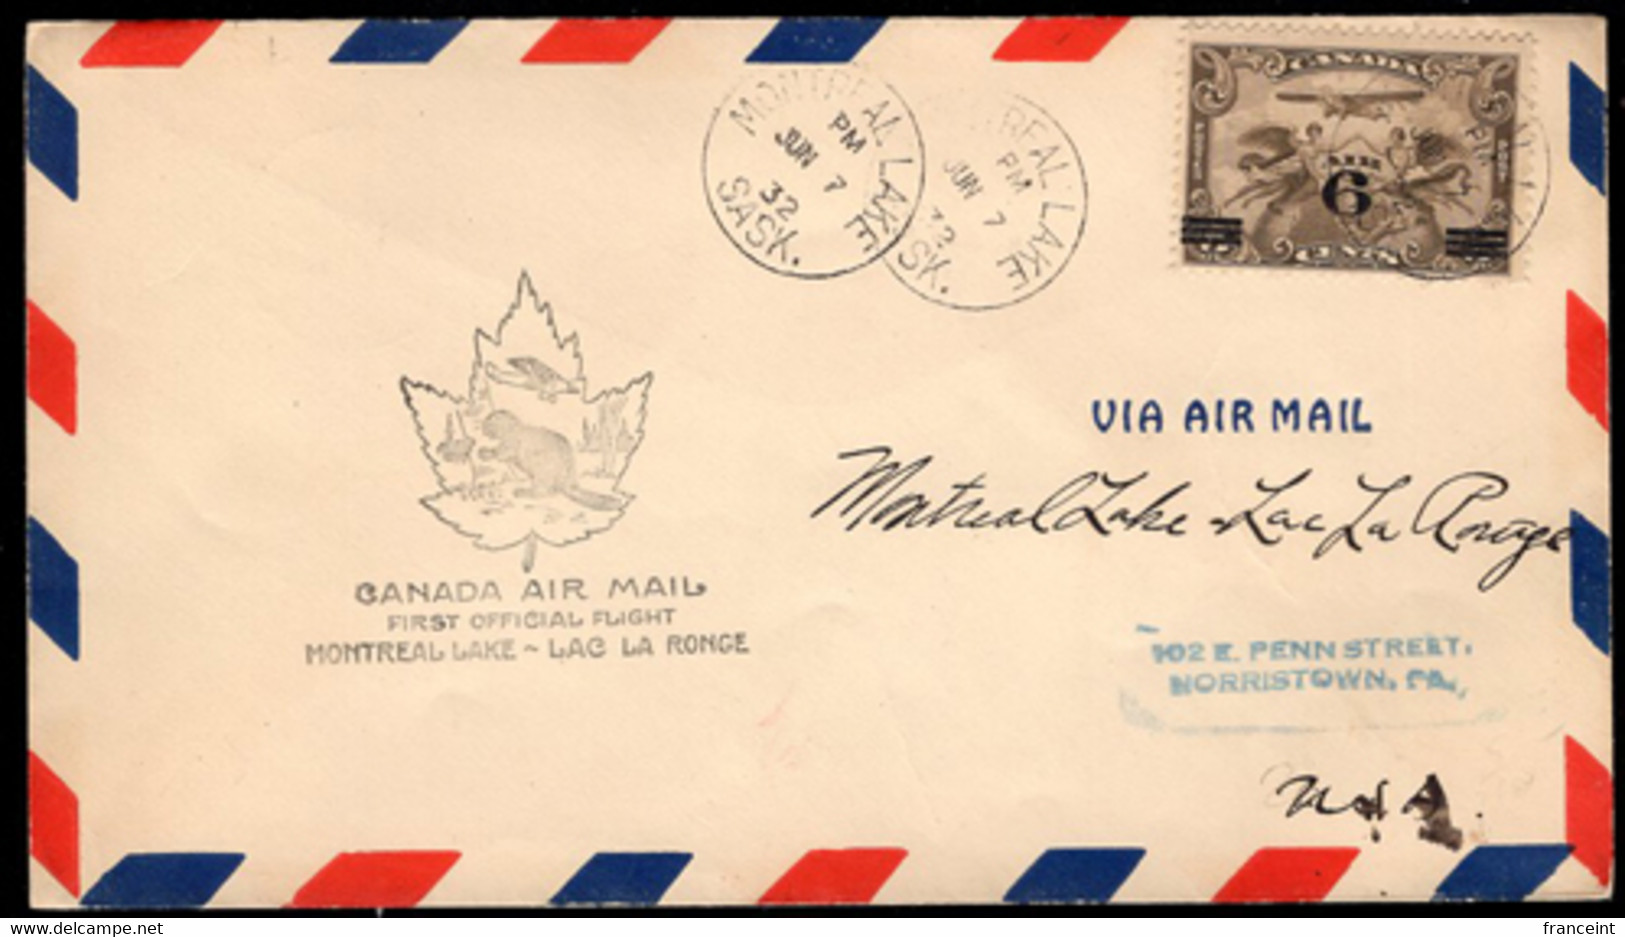 CANADA (1932) Maple Leaf. Beaver. Plane. First Flight Letter Montréal Lake -> Lac La Ronge. - First Flight Covers